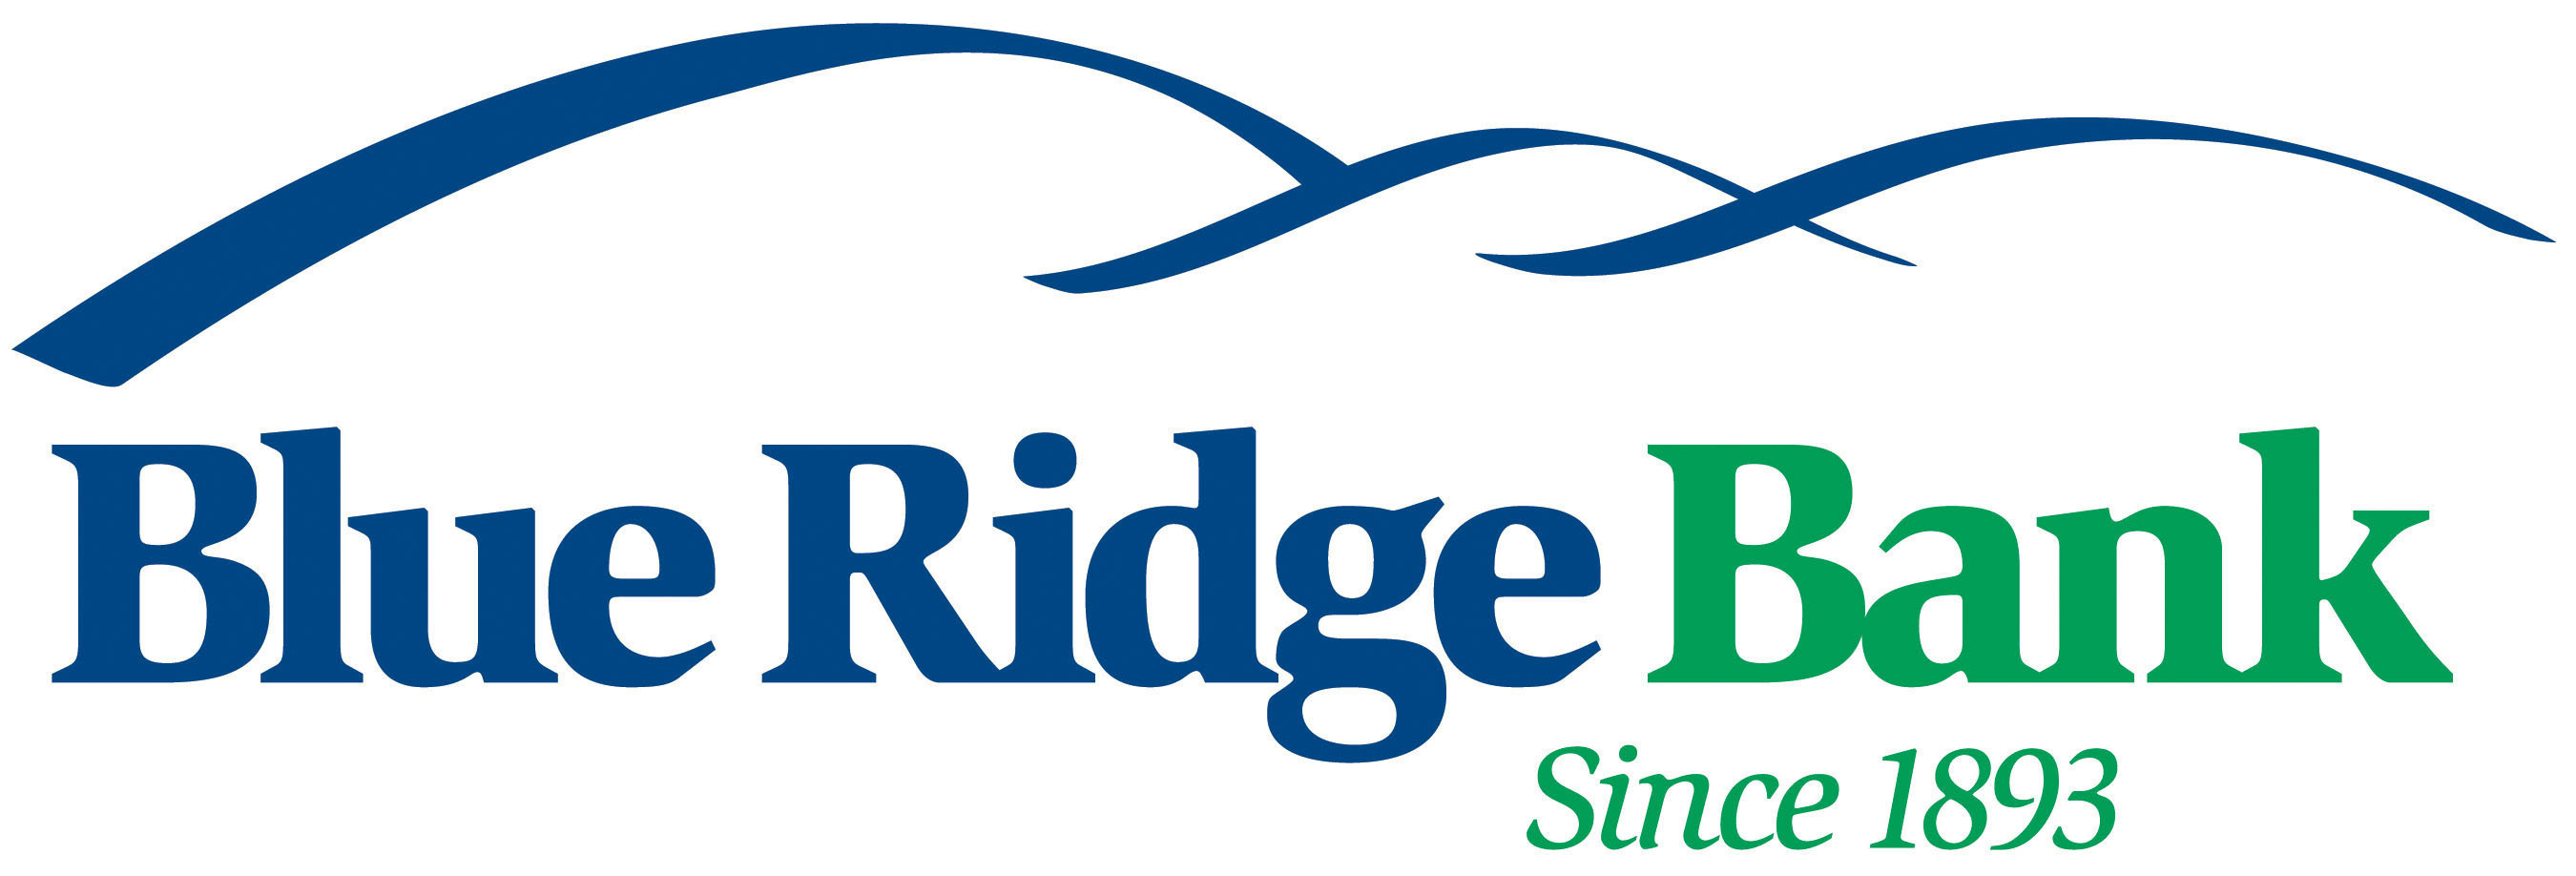 Blue Ridge Bank, since 1893. (PRNewsFoto/Blue Ridge Bankshares, Inc.) (PRNewsFoto/)